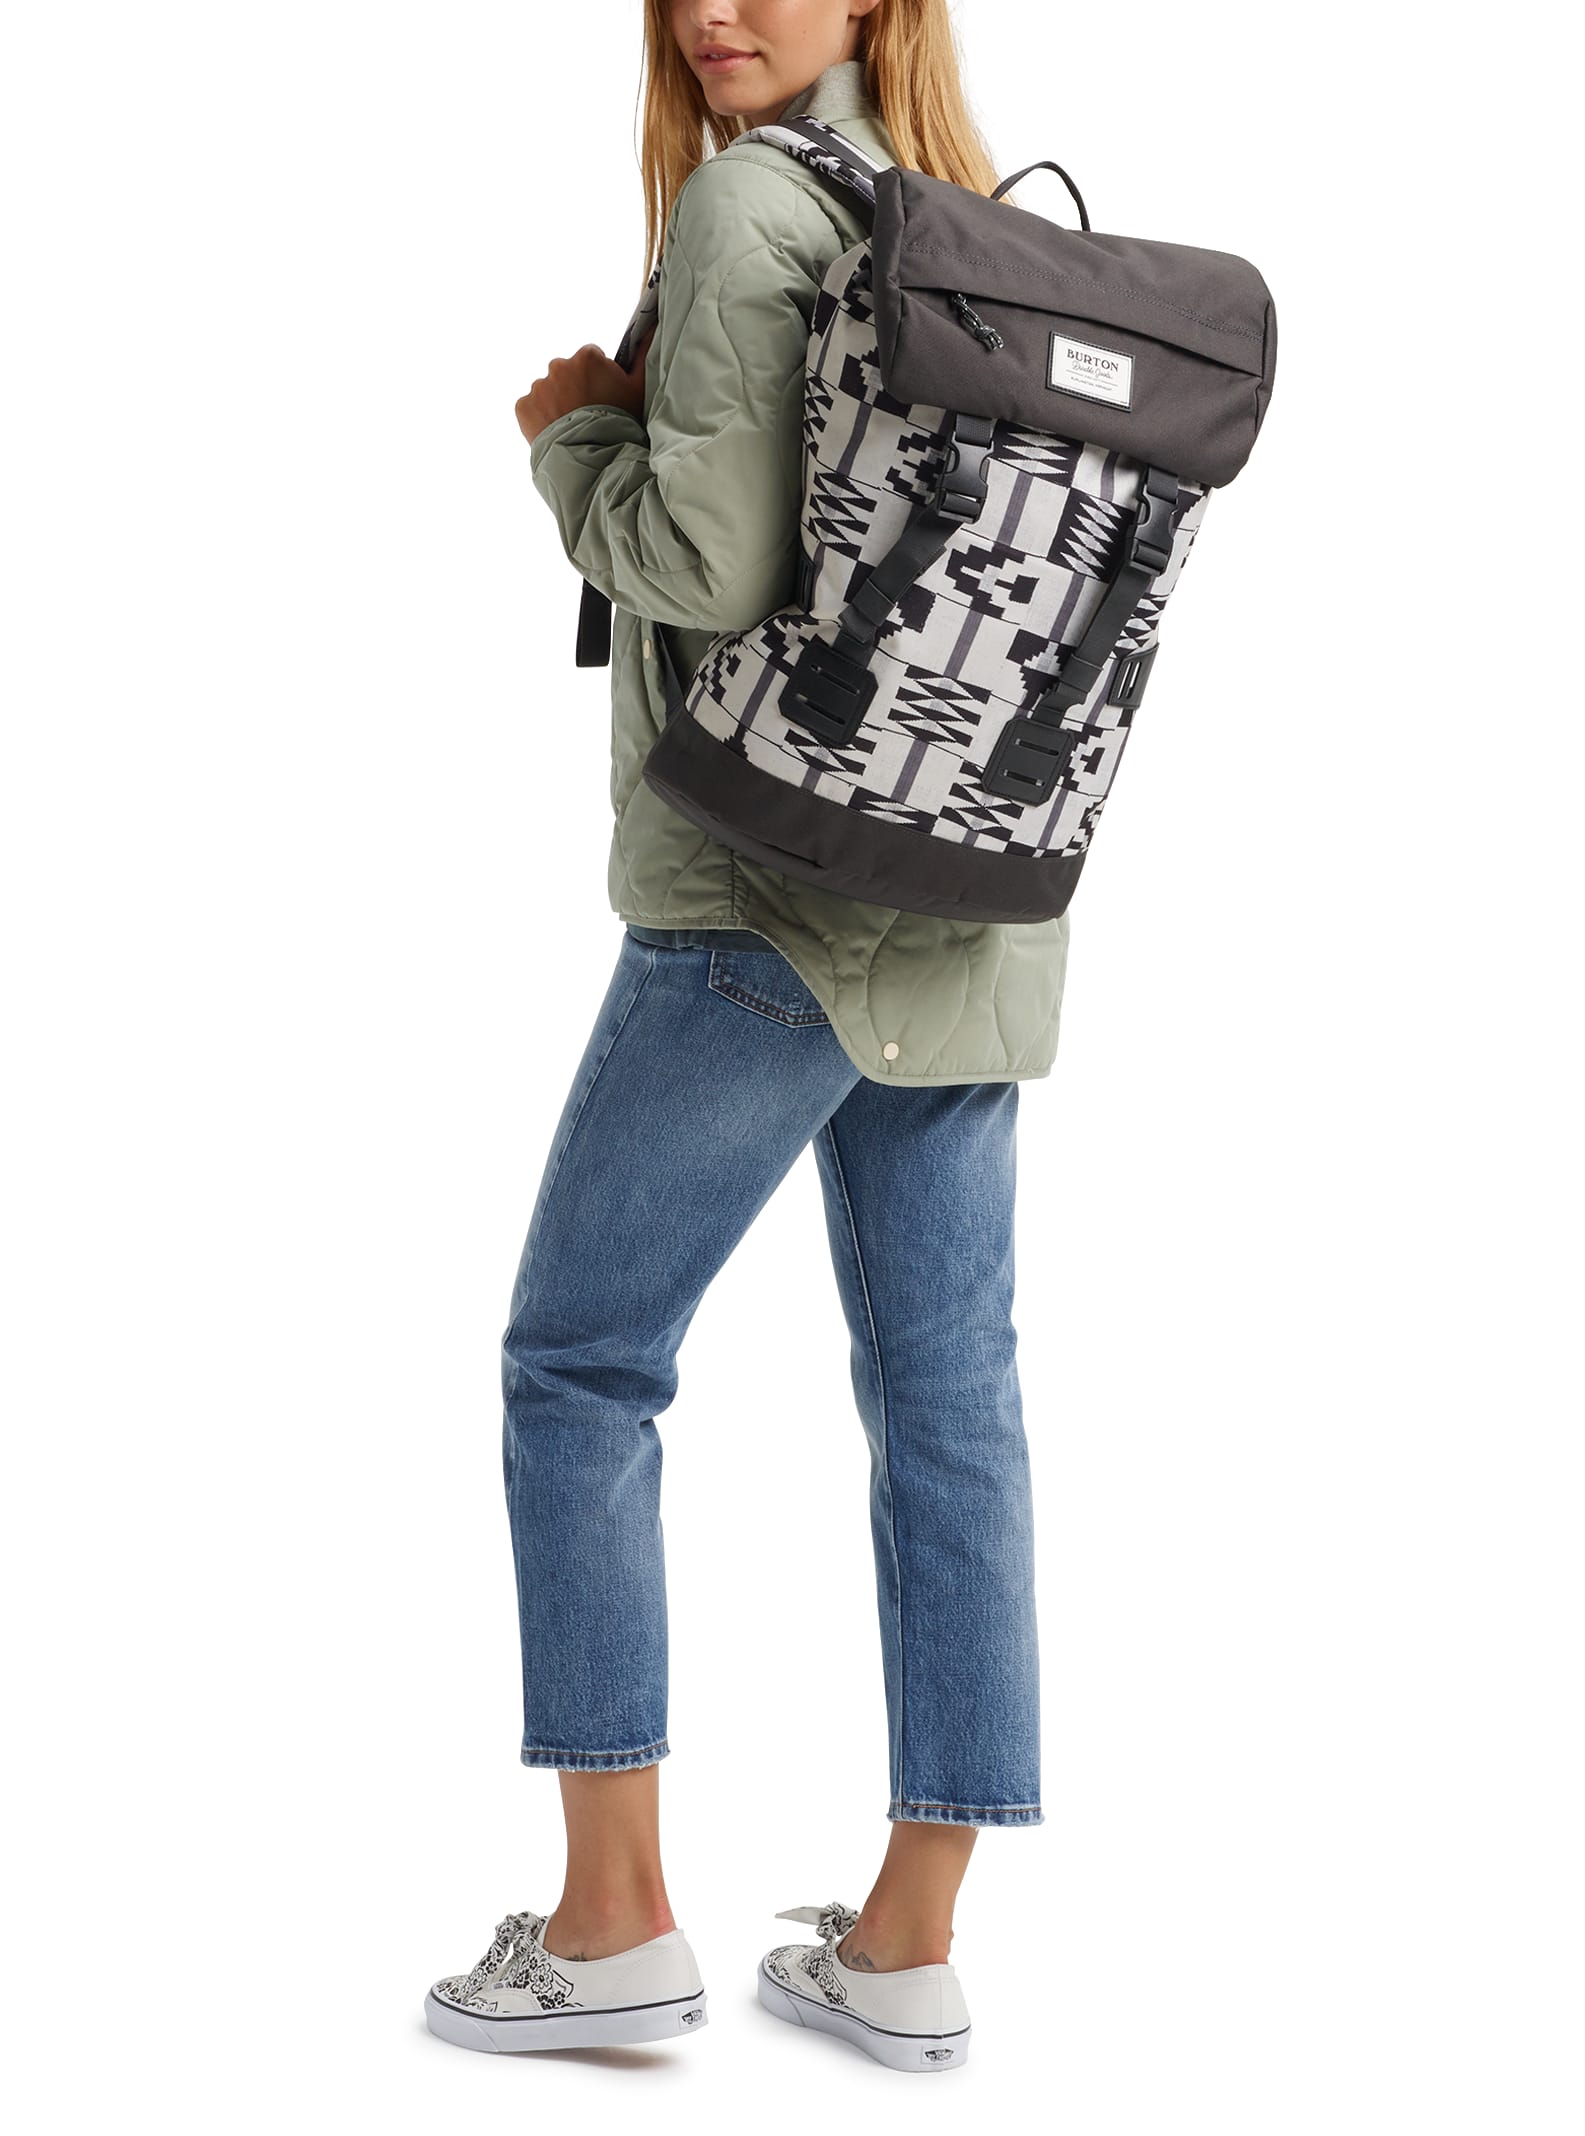 Burton tinder backpack